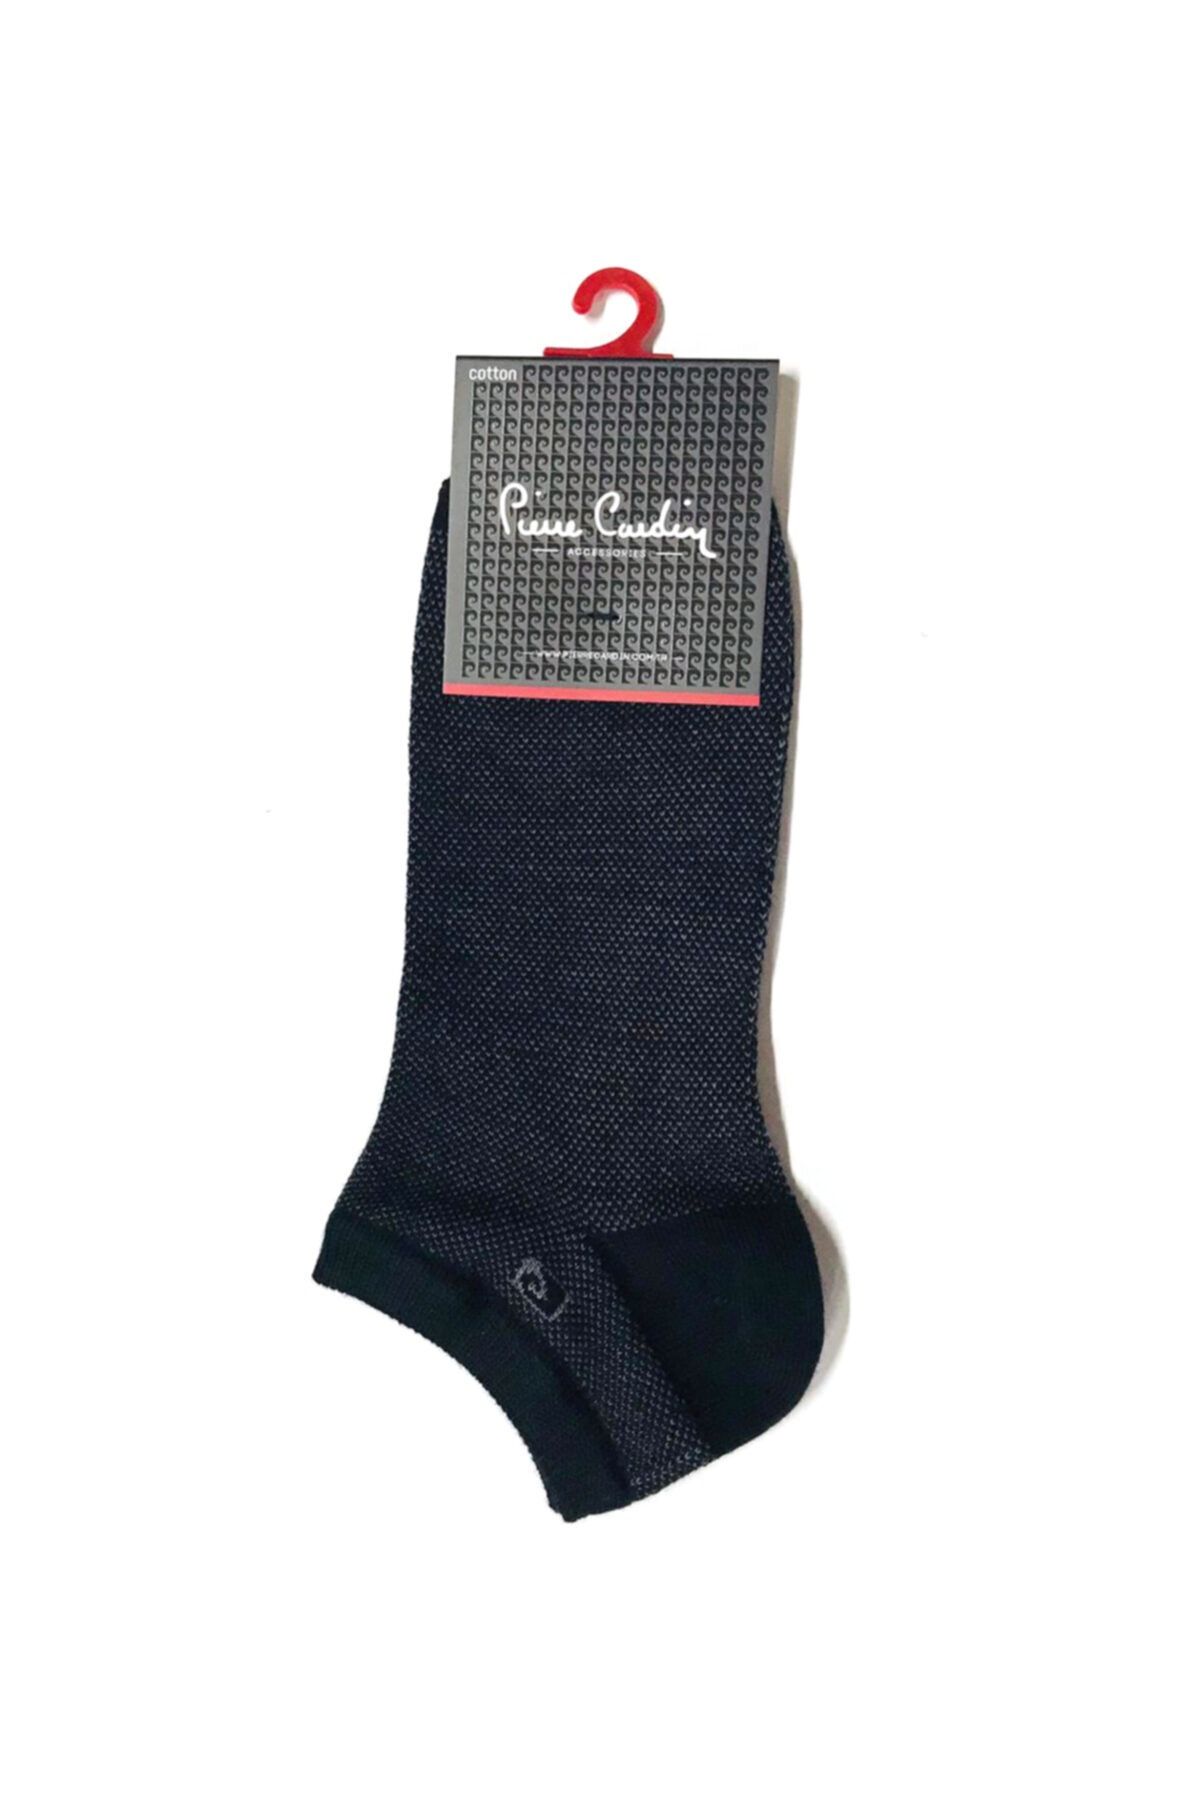 Pierre Cardin Lens Pamuk Erkek Patik Çorap Siyah